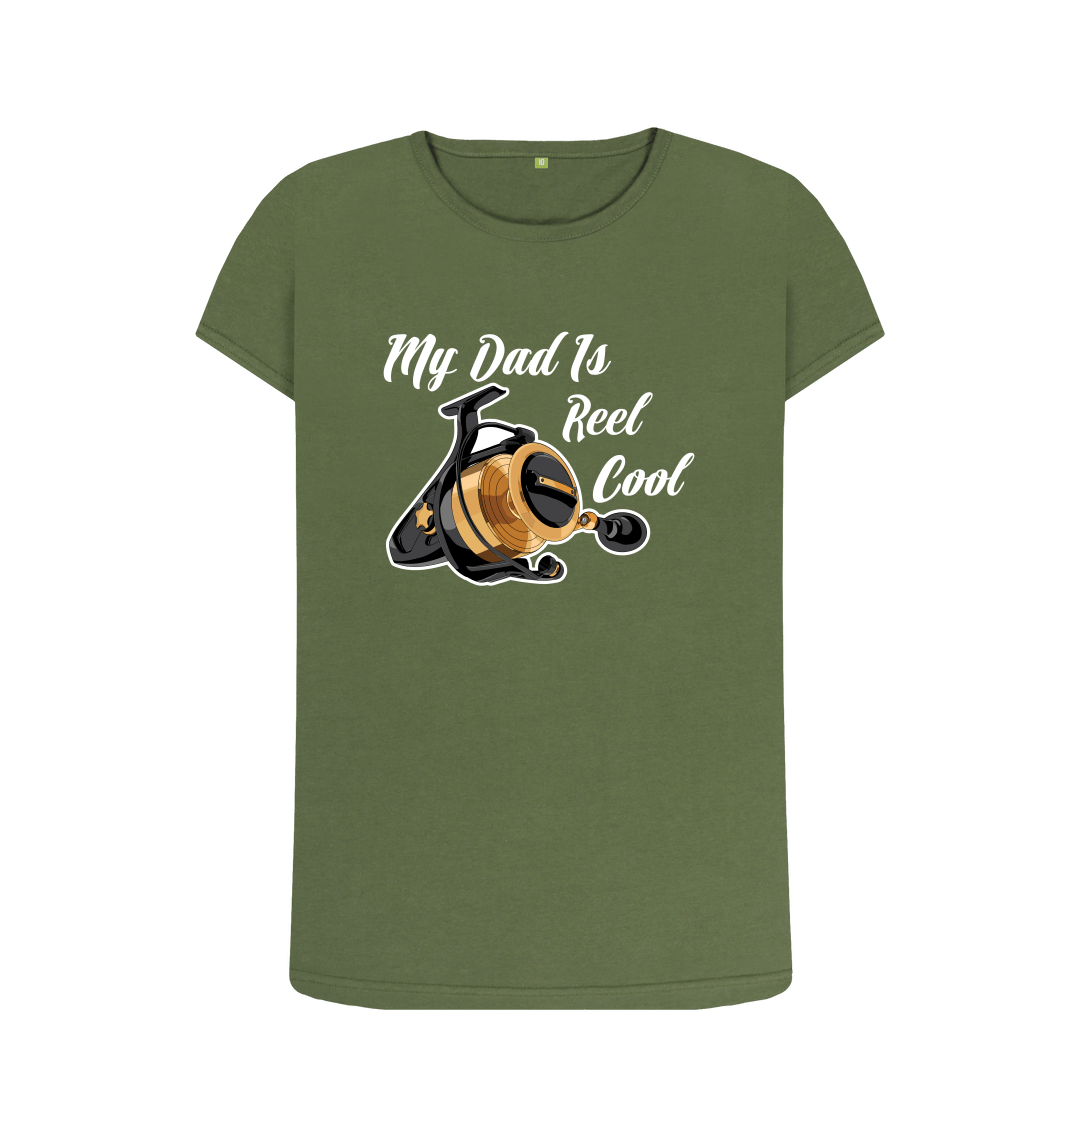 Fishing Shirt for Dad, Fishing Gift for Dad, Funny Fishing Shirt, Reel Cool Dad Shirt, Fly Fishing Gift, Fishing Lure, Fish Shirt